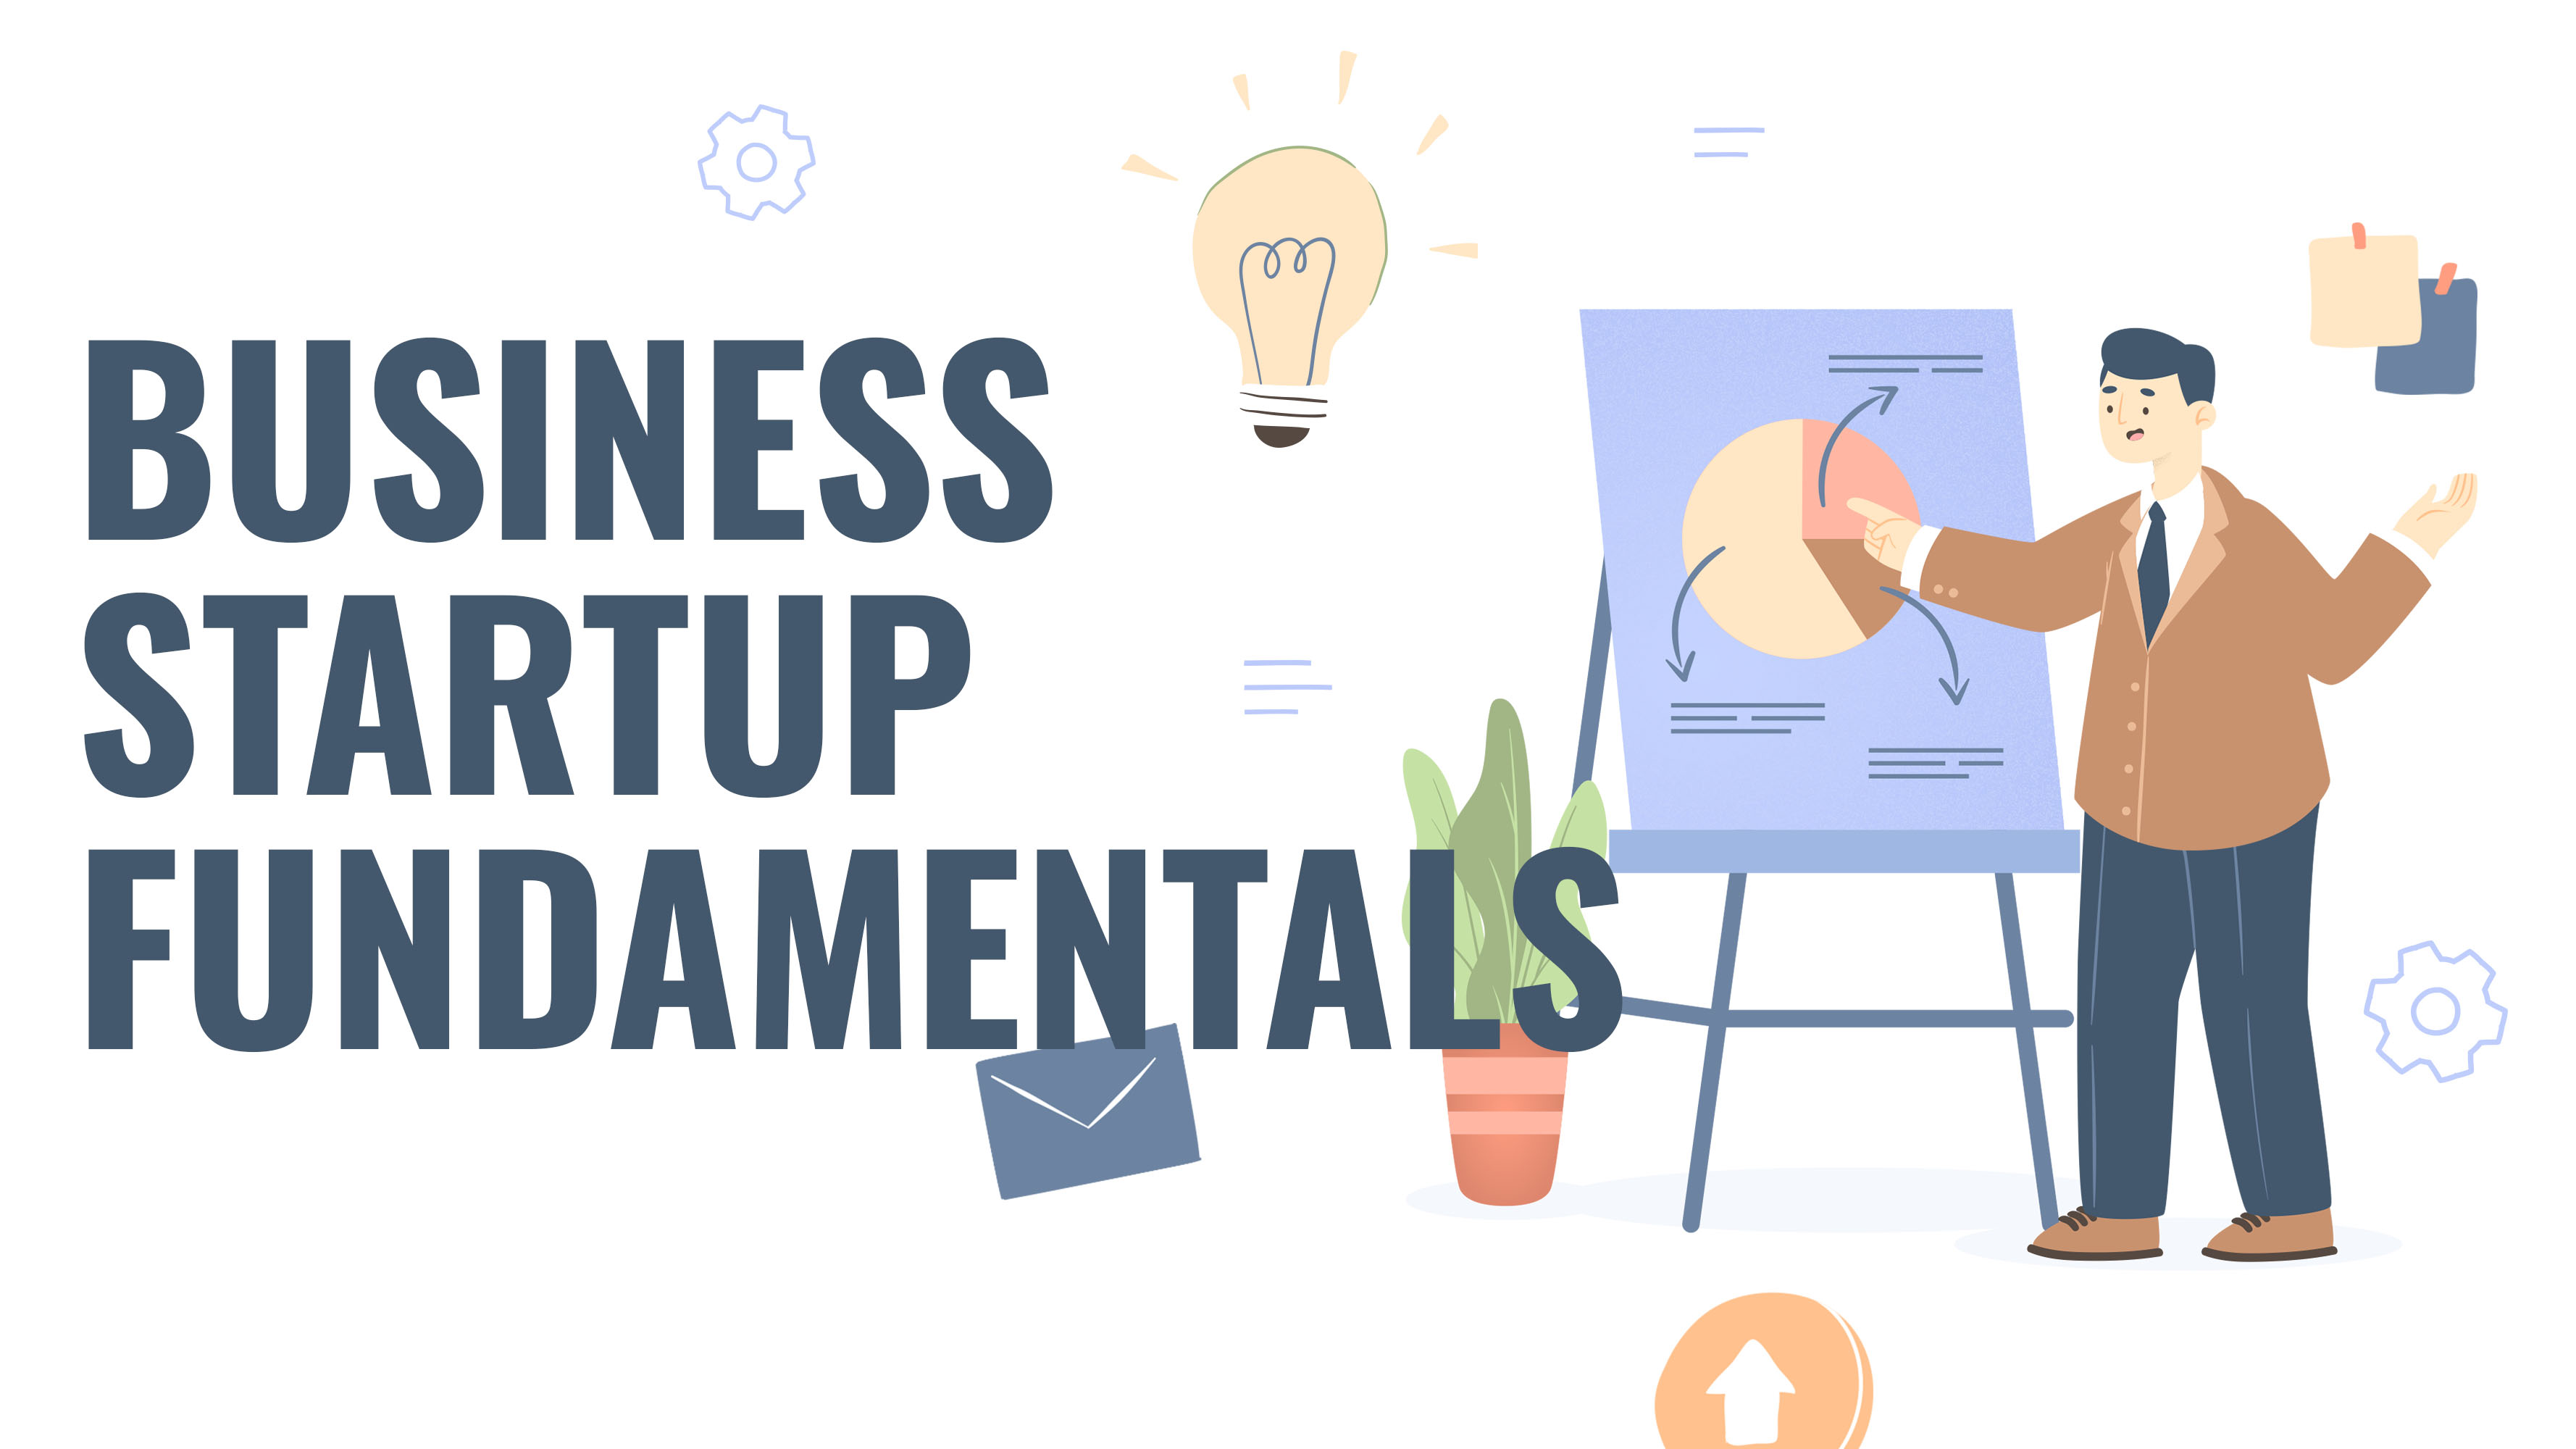 Business StartUp Fundamentals